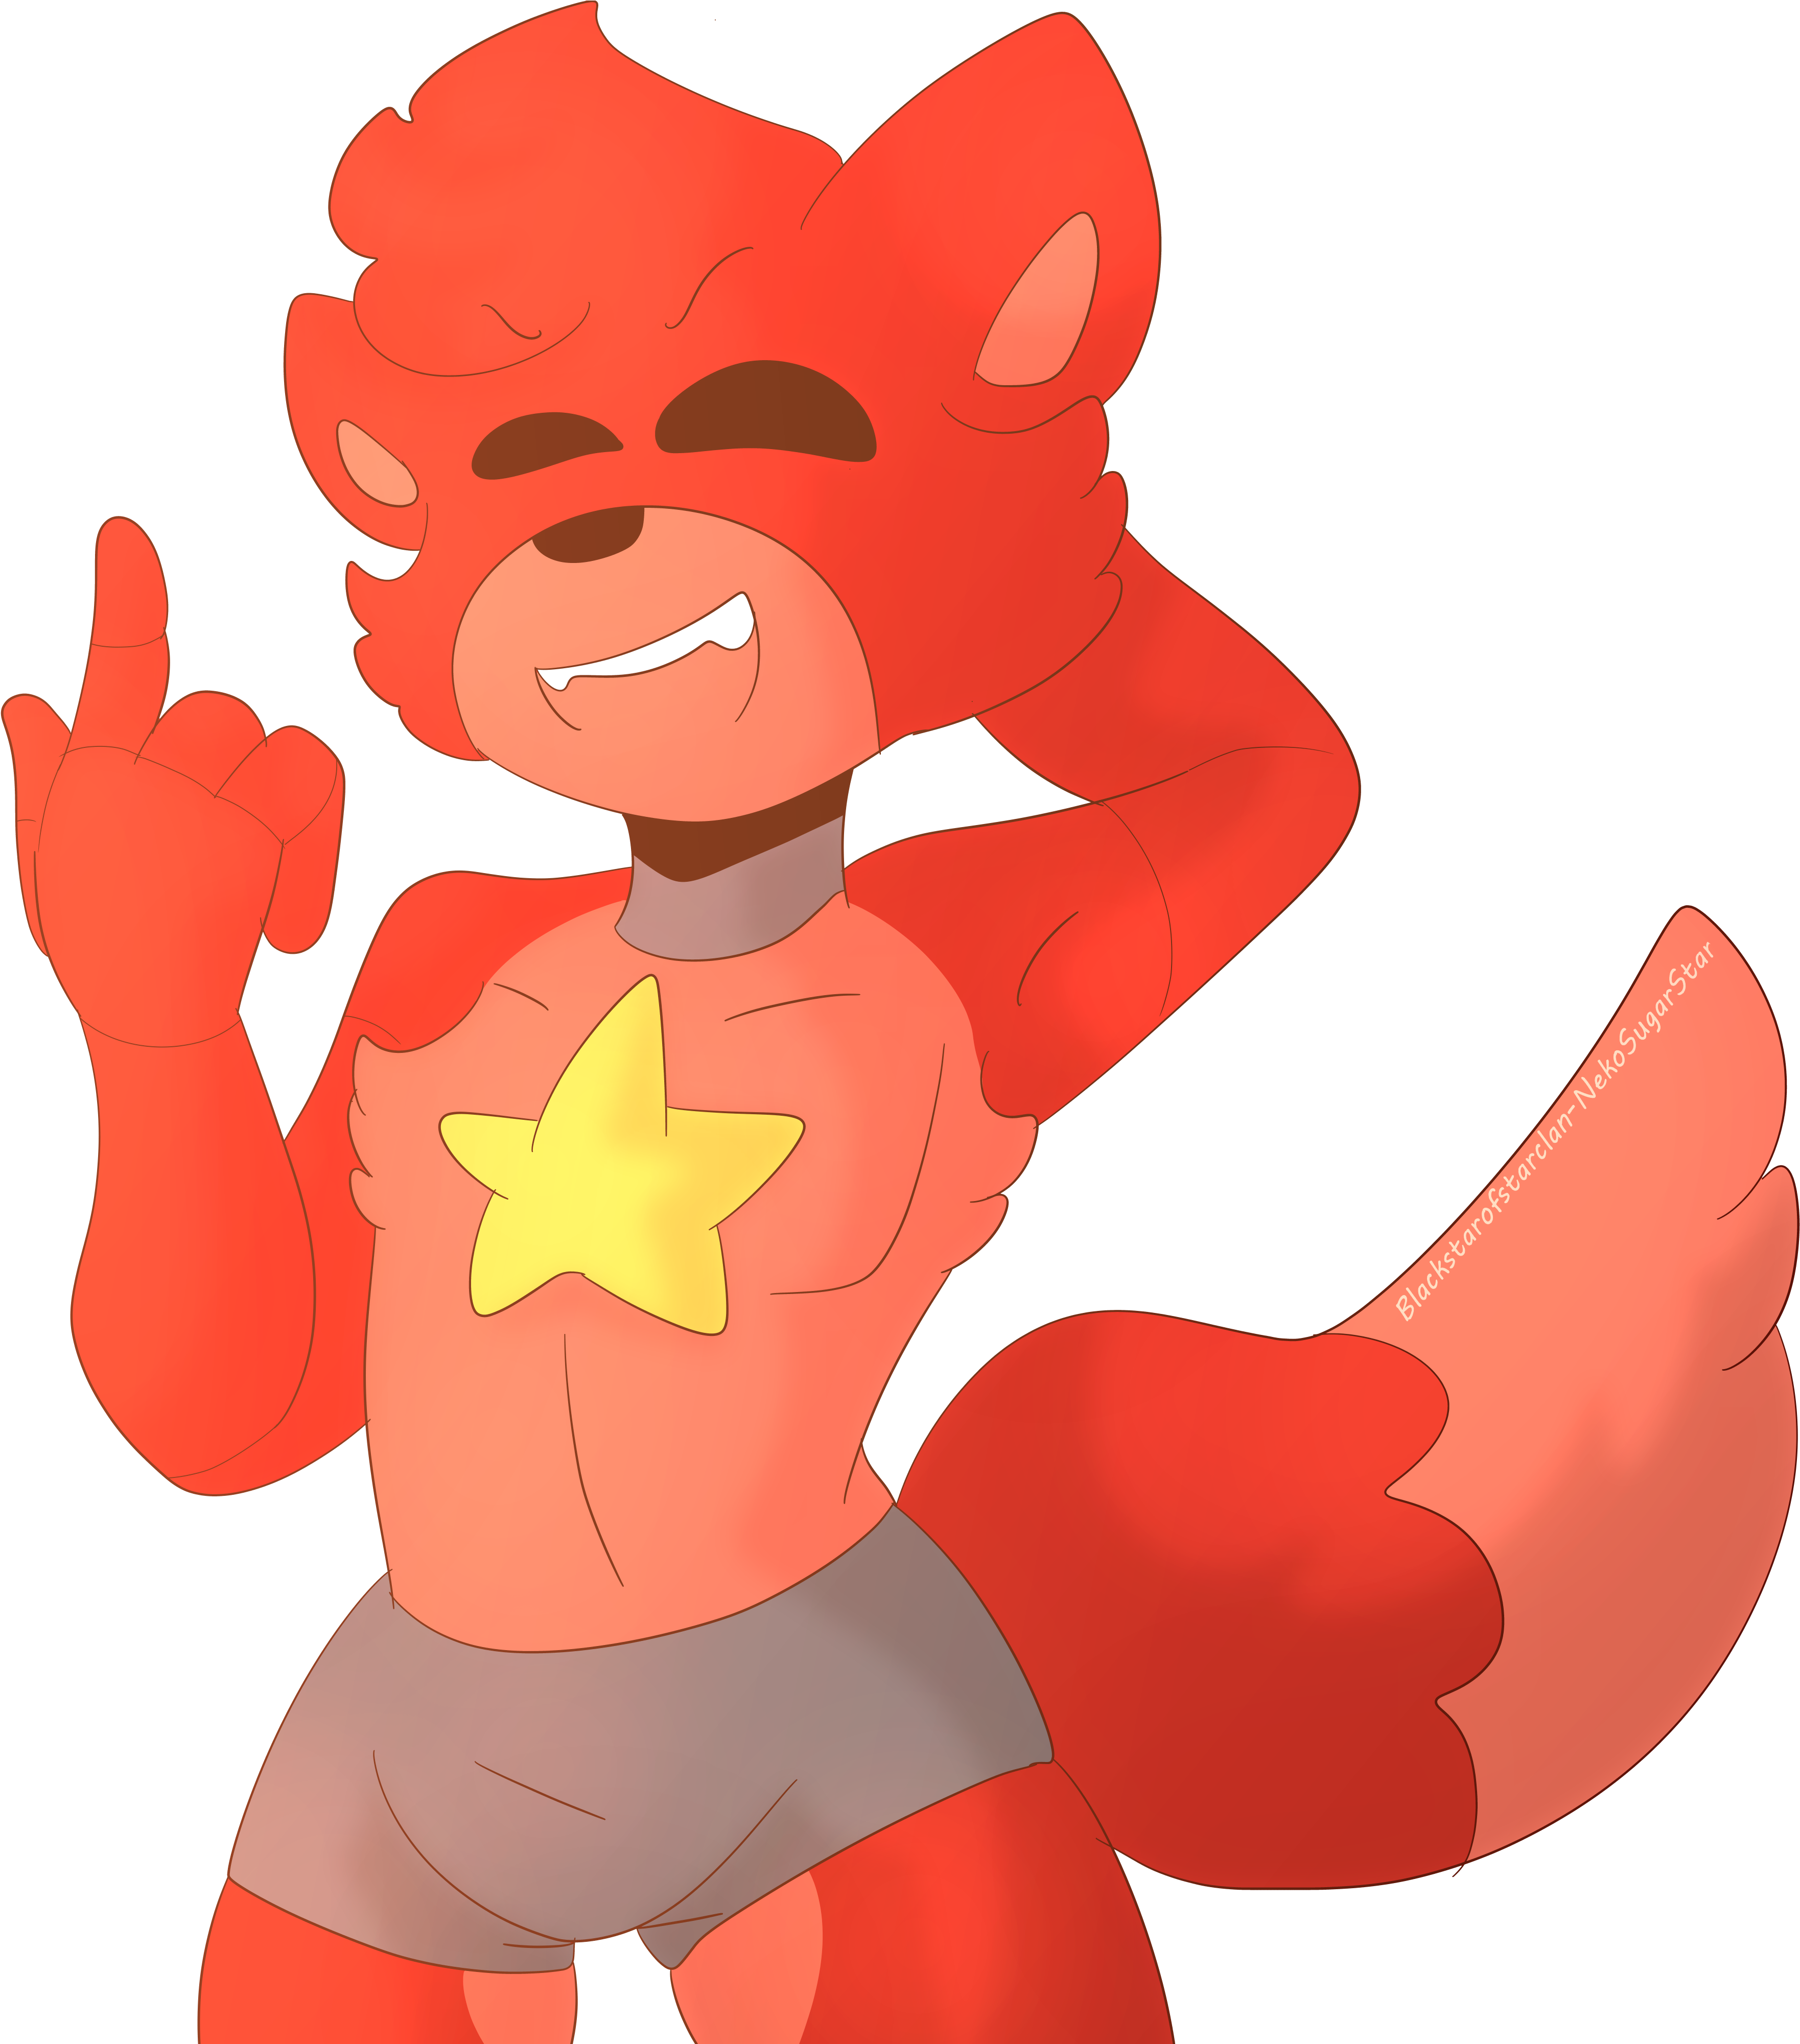 Animated Rockstar Fox Character